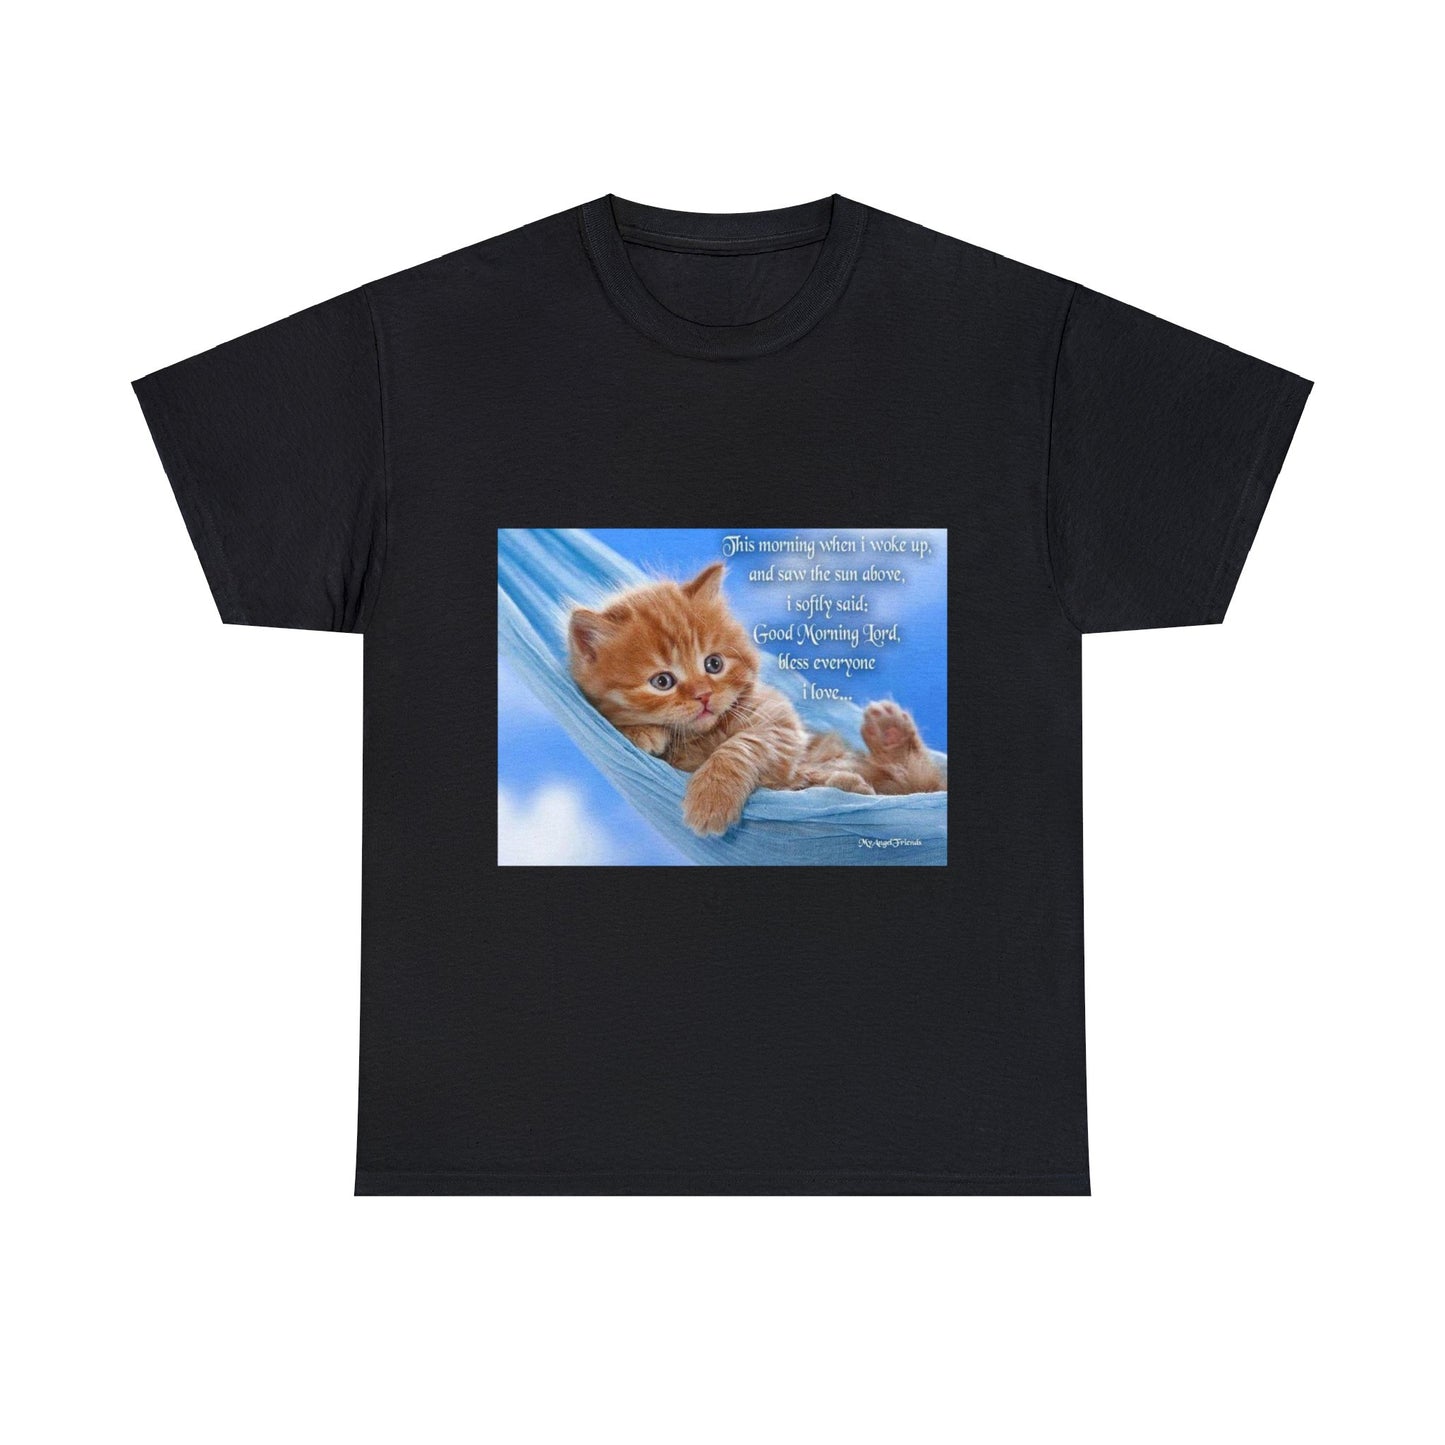 Good Morning Cat Shirt